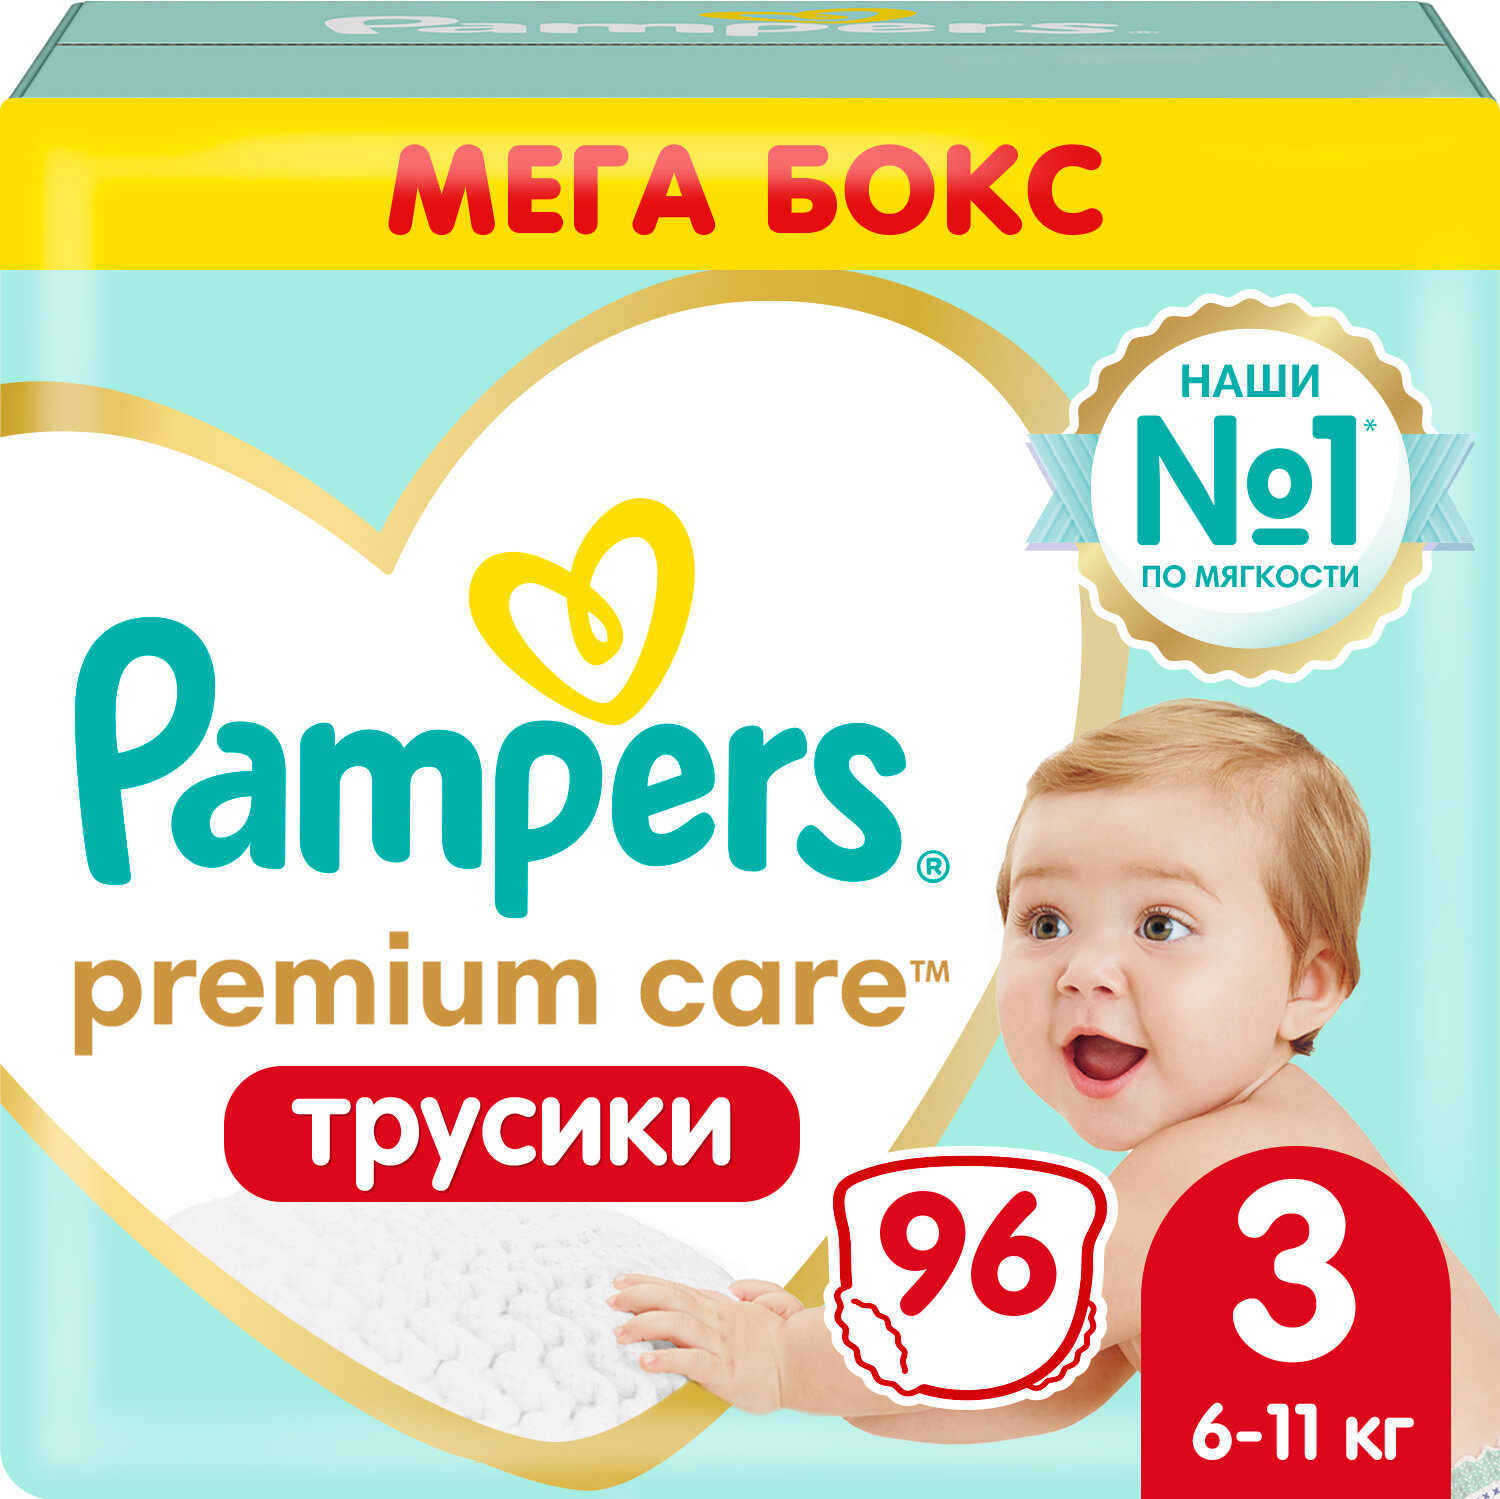 Pampers Premium Care Трусики Размер 3, 96 Трусиков, 6кг-11кг